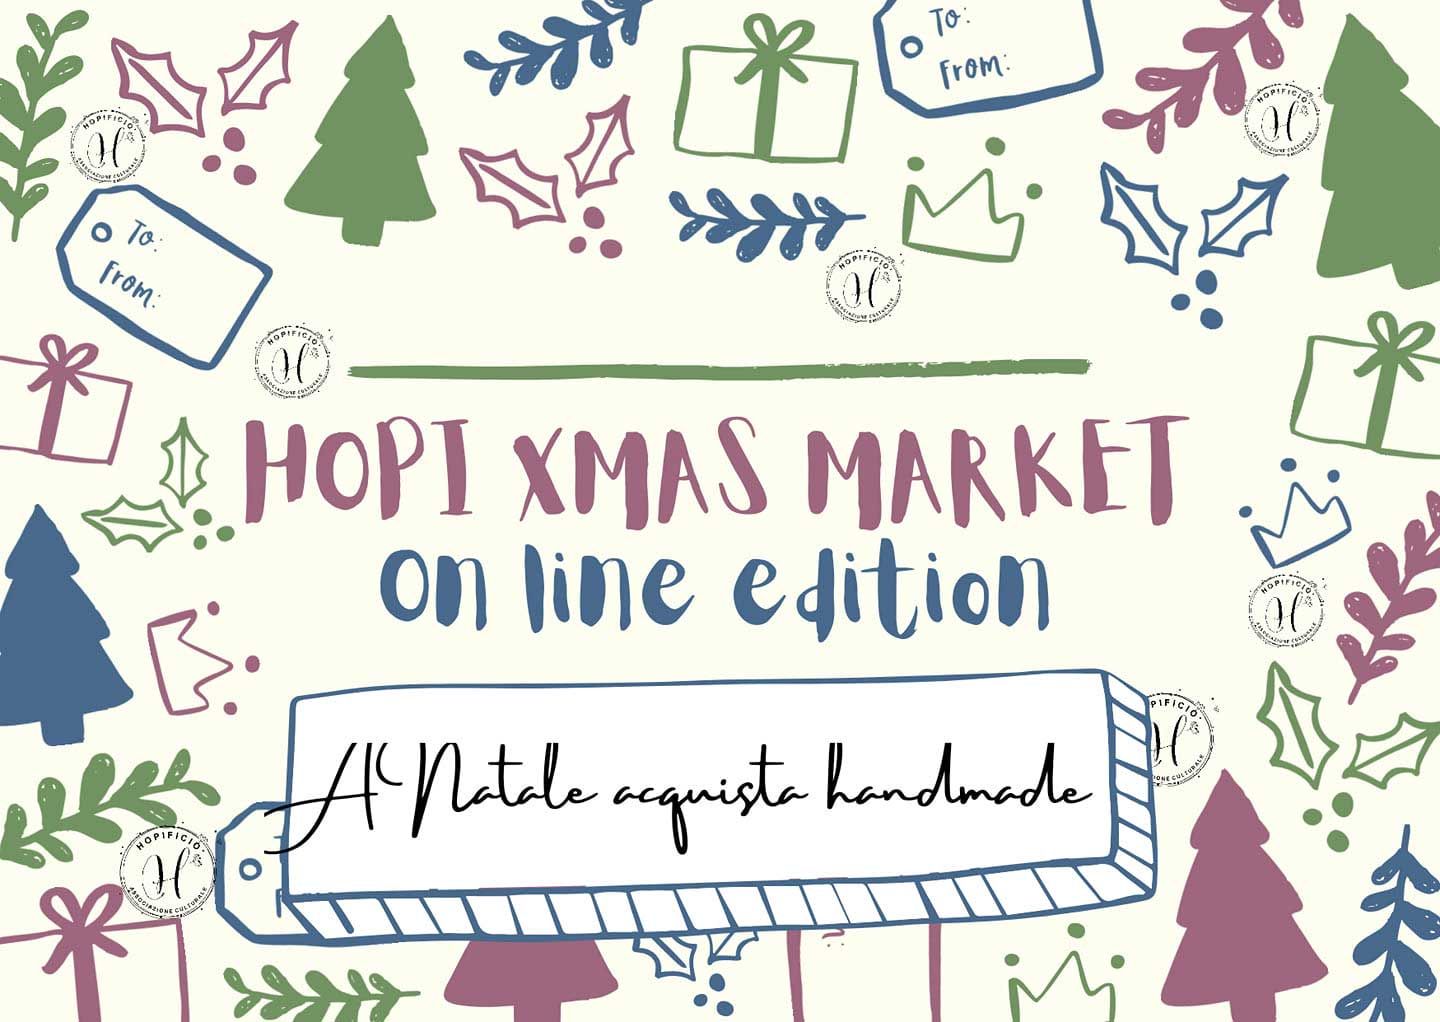 hopi-xmas-market-online-edition-2020